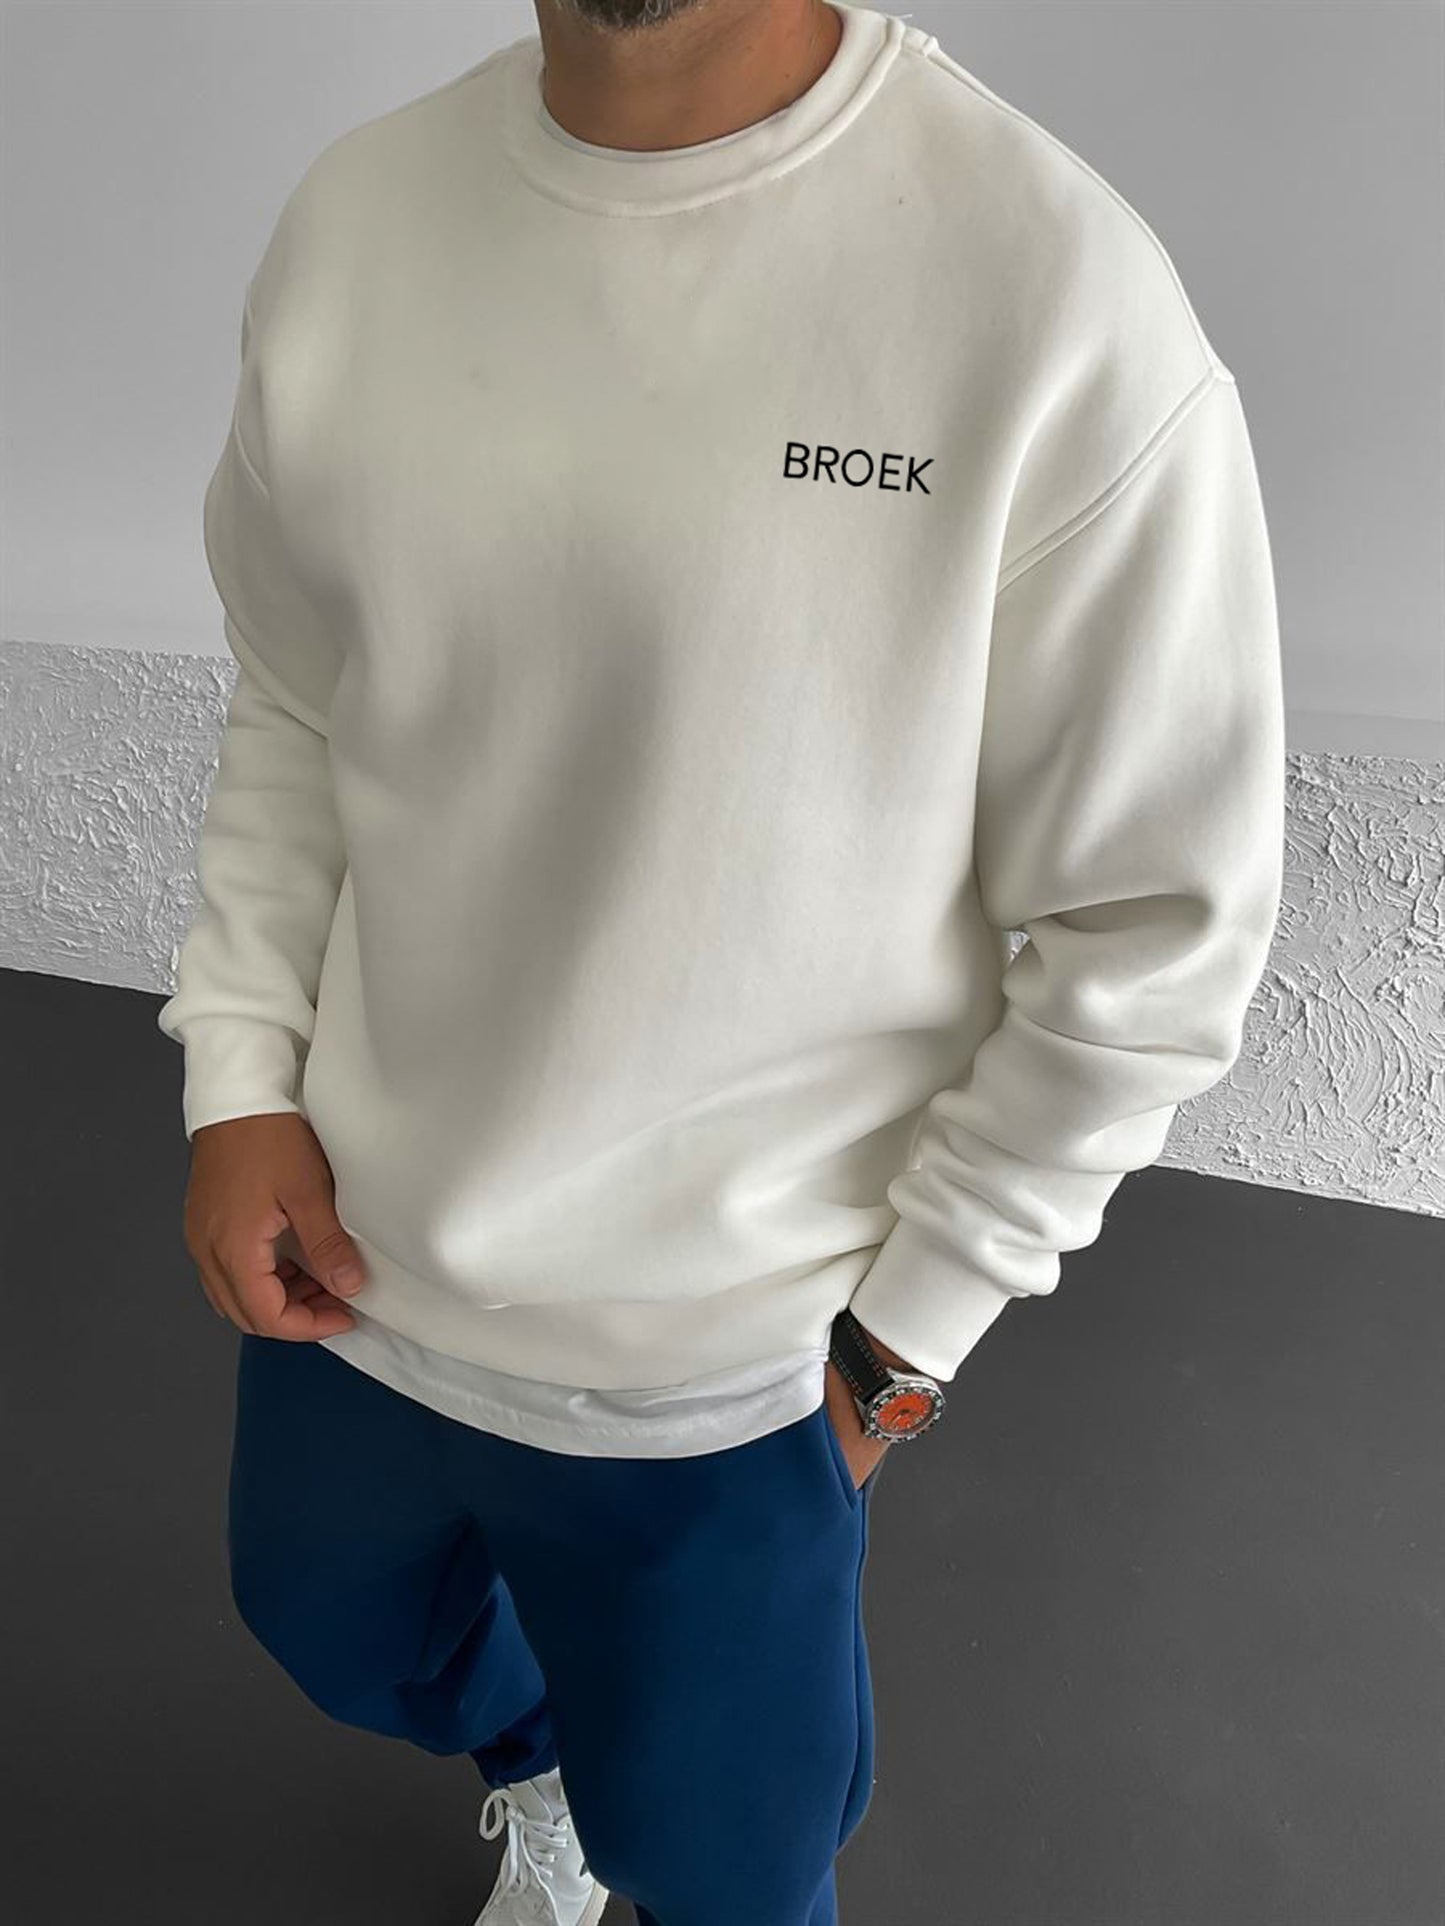 Off-White "Life" Printed Oversize Sweatshirt